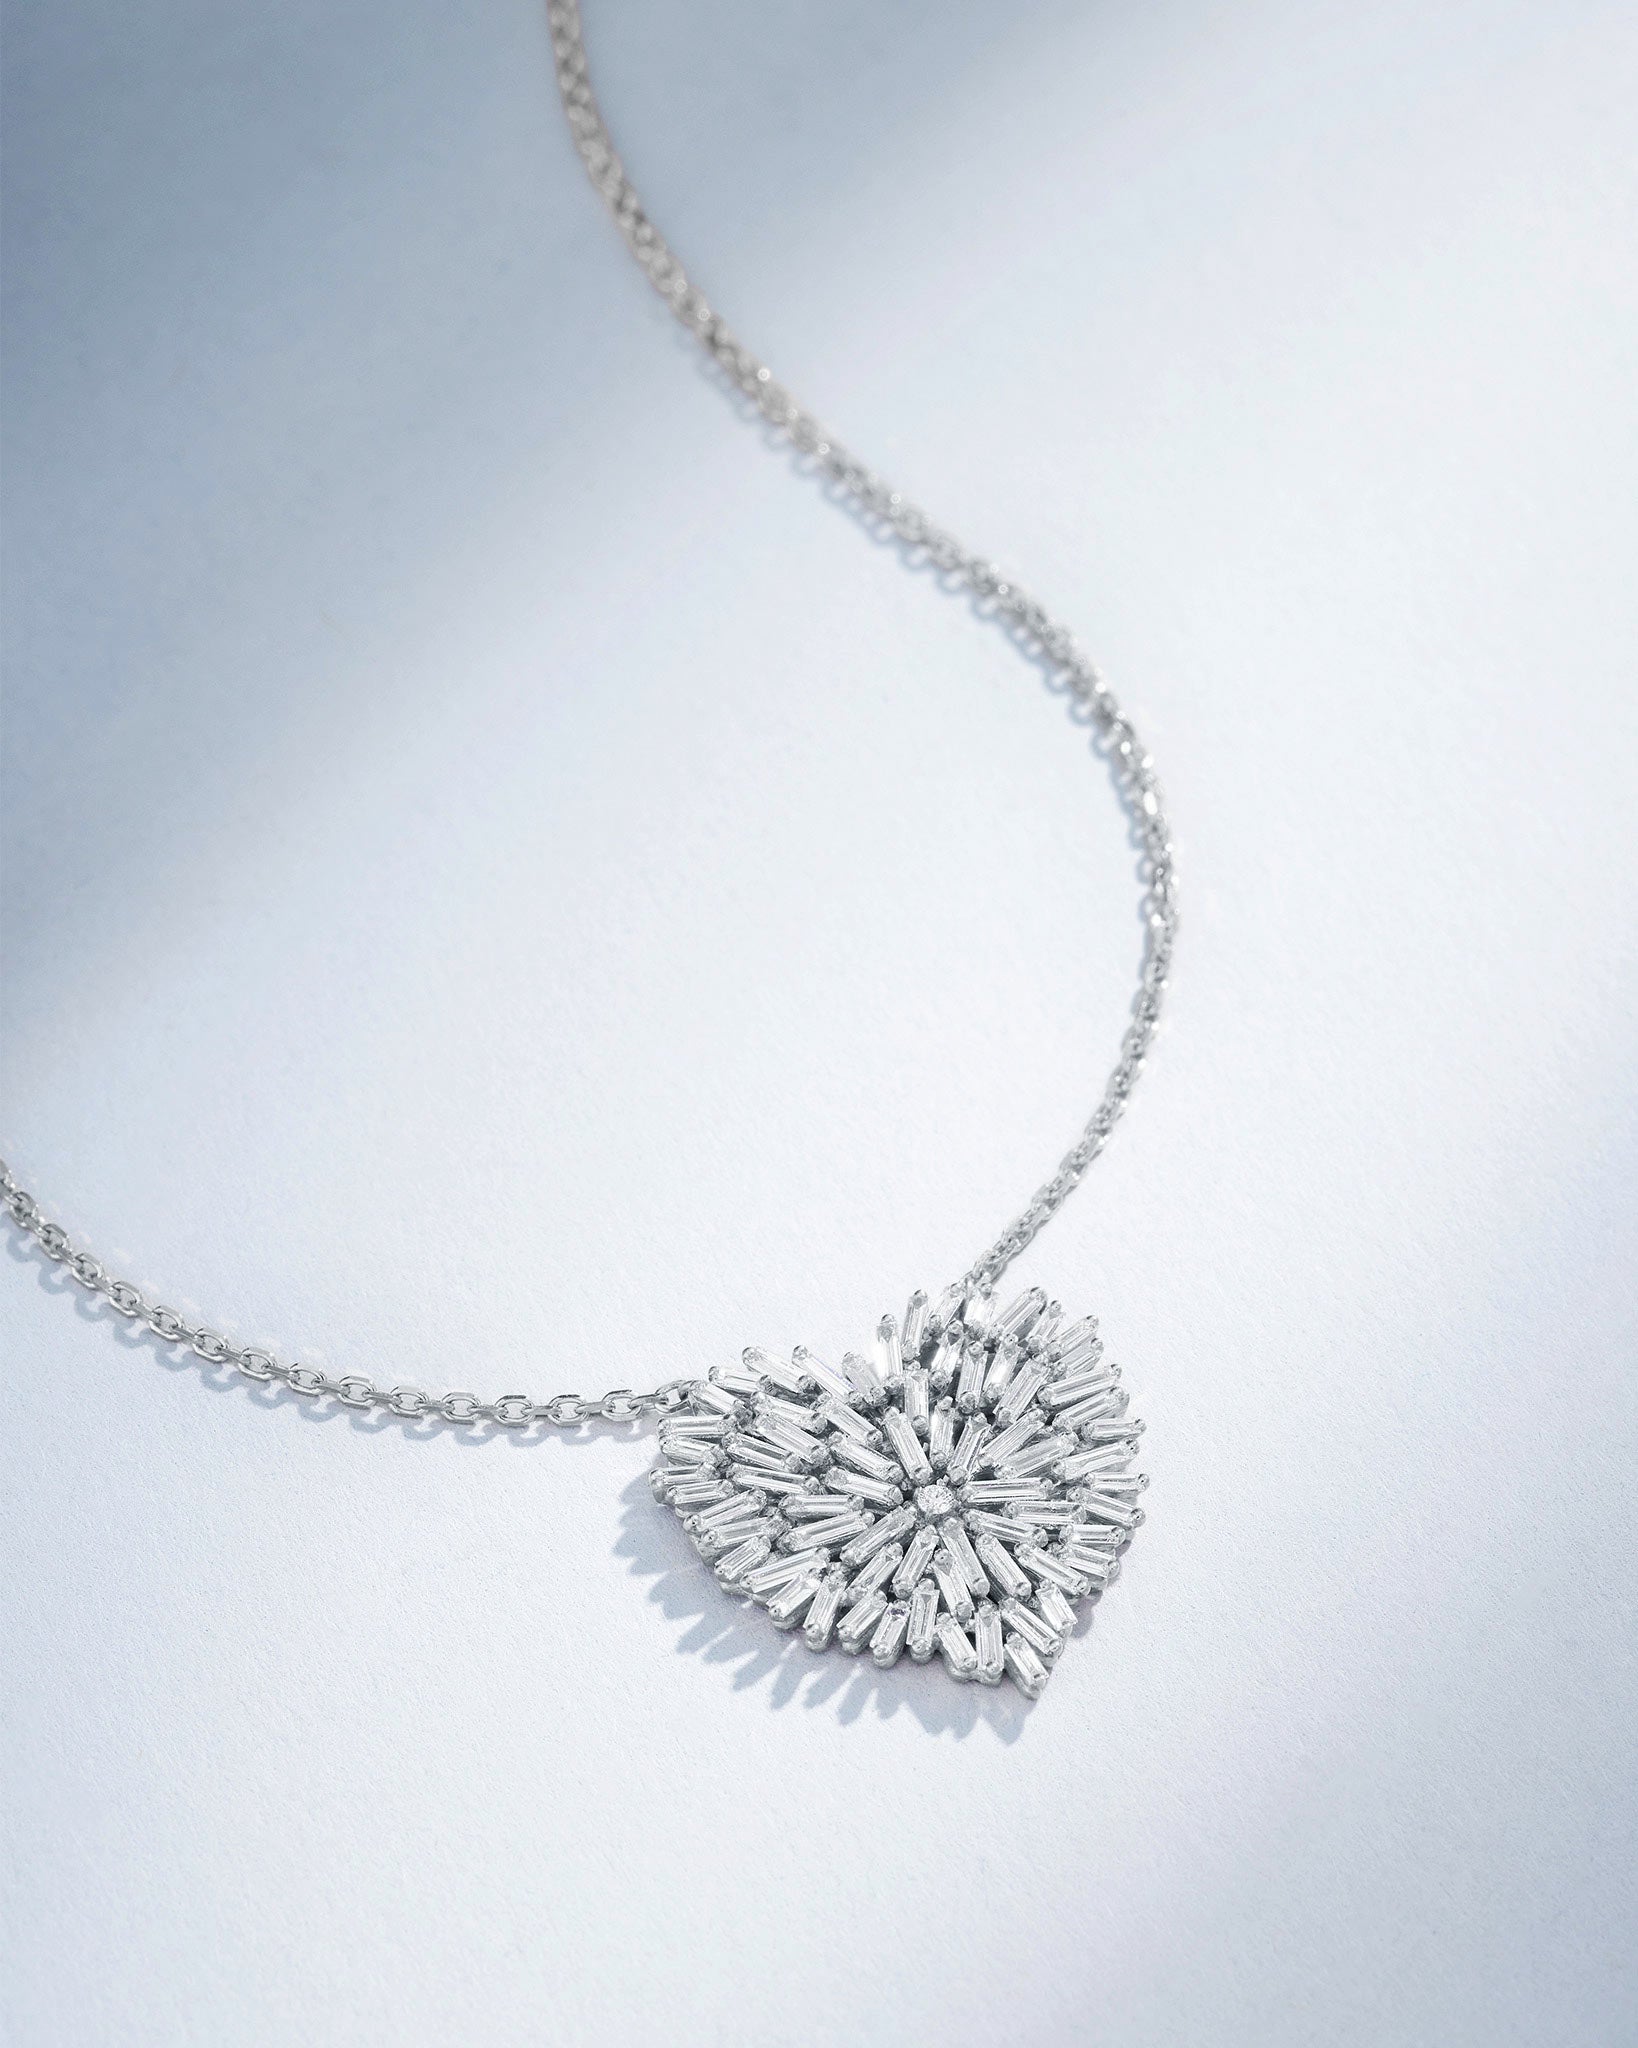 Suzanne Kalan Classic Diamond Medium Heart Pendant in 18k white gold